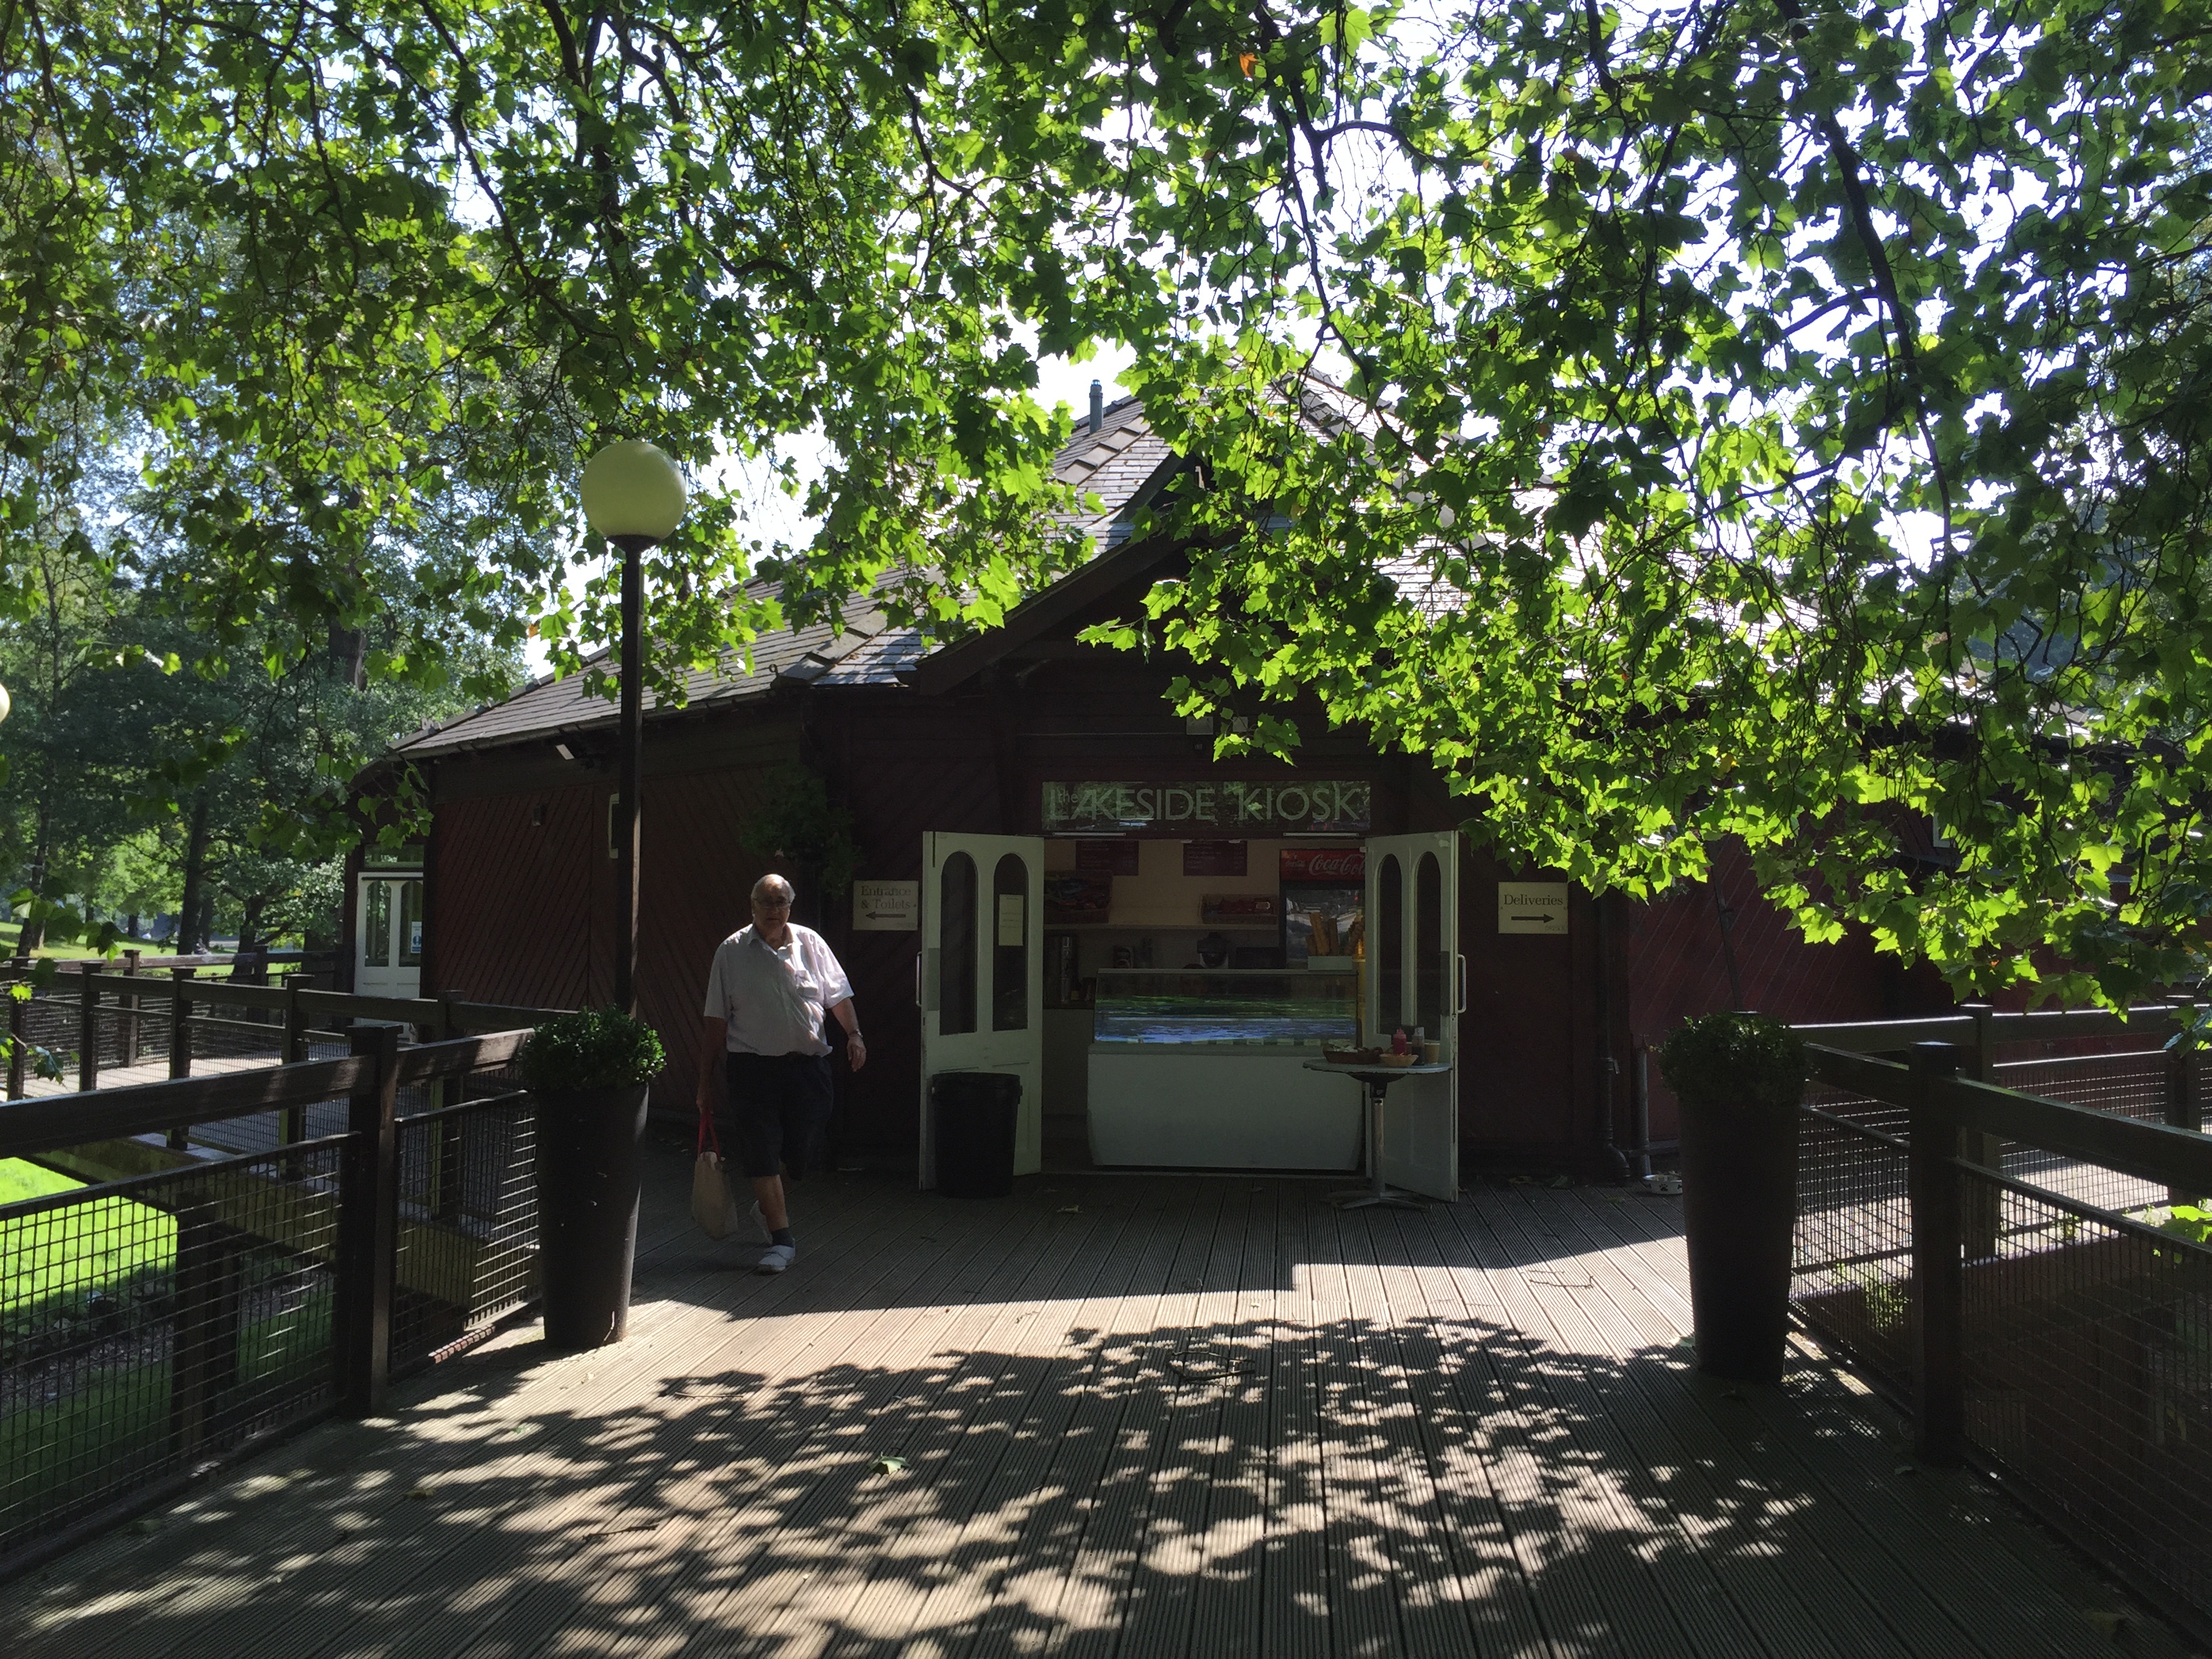 Lakeside Cafe Roundhay Park